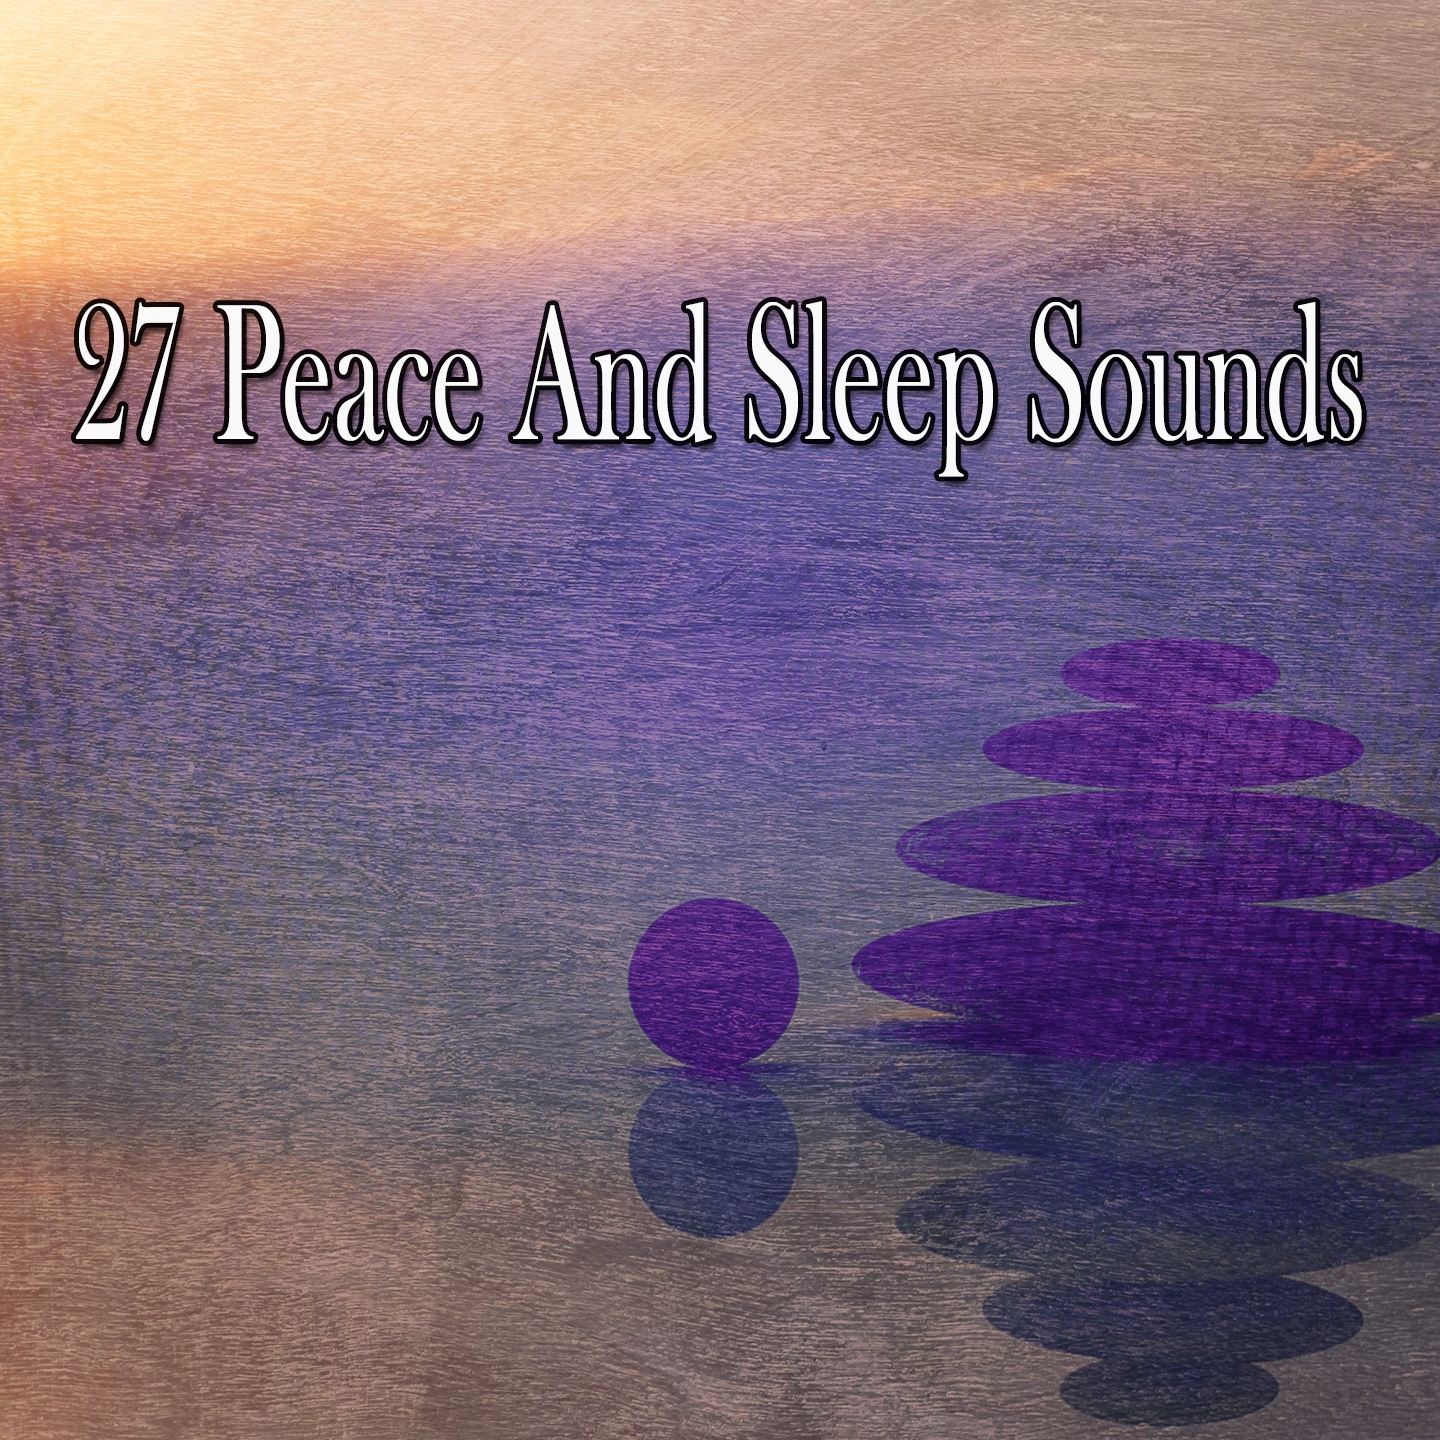 27 Peace And Sleep Sounds